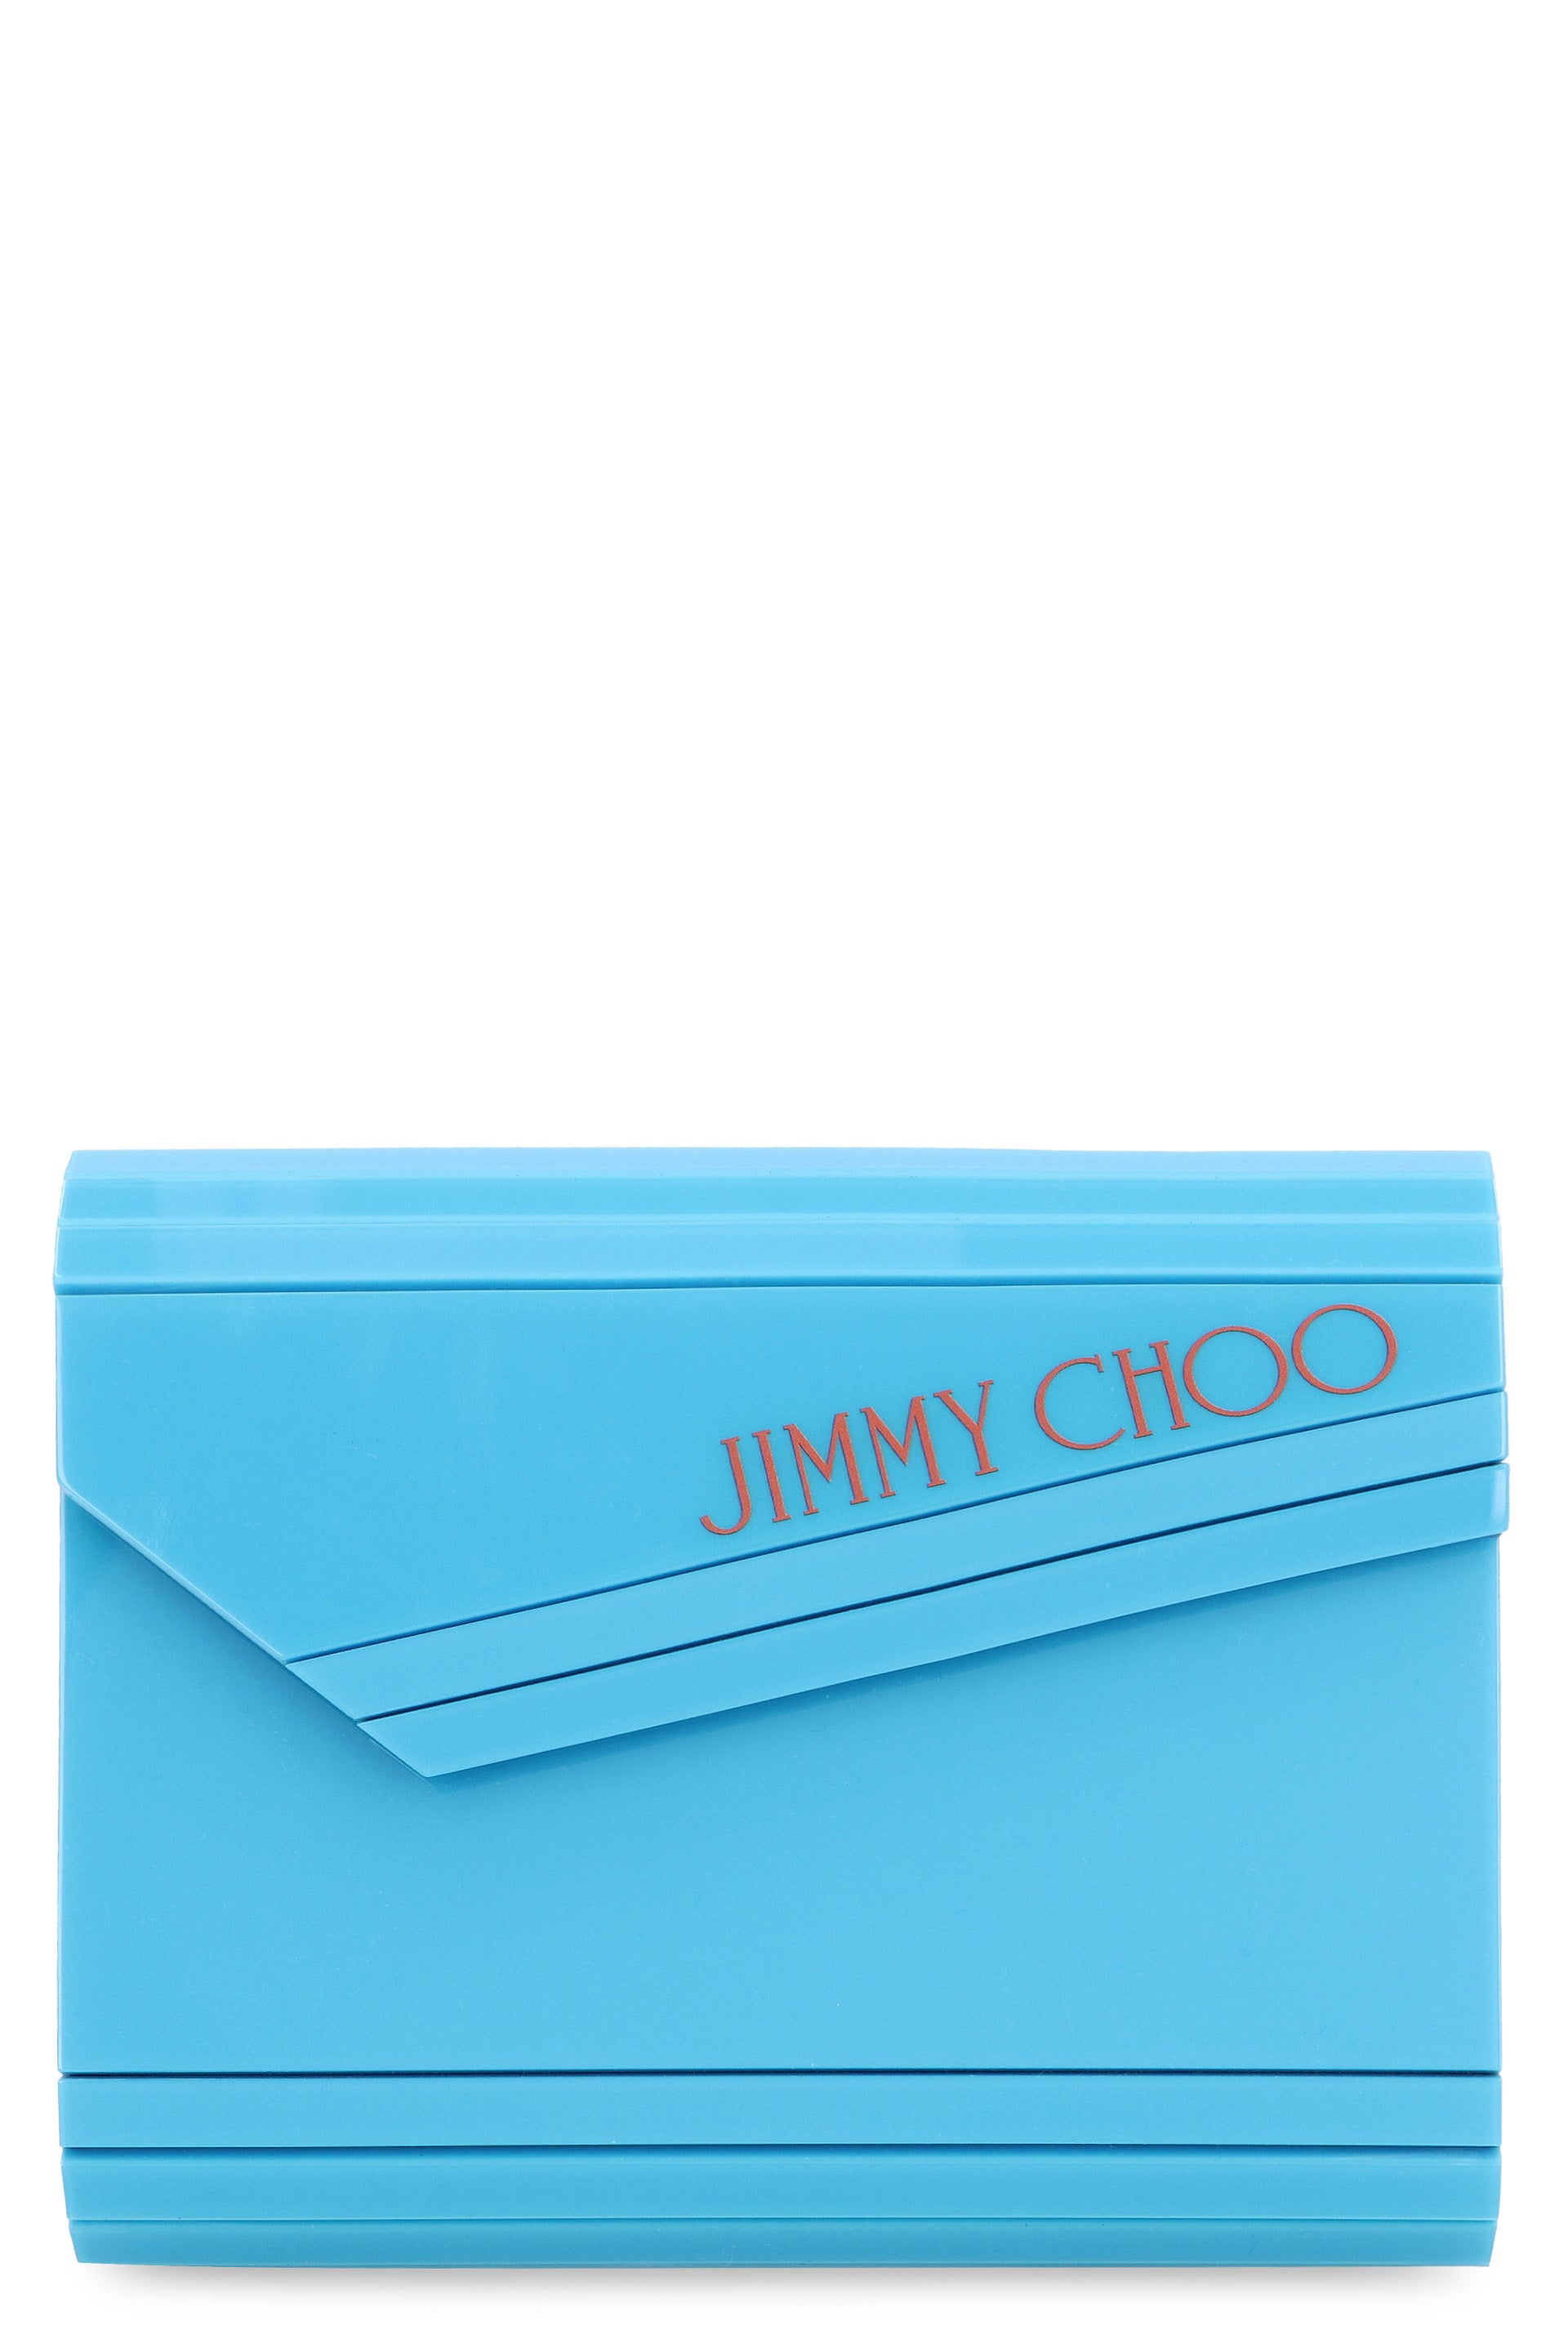 Jimmy Choo Light Blue Acrylic Candy Clutch For Women